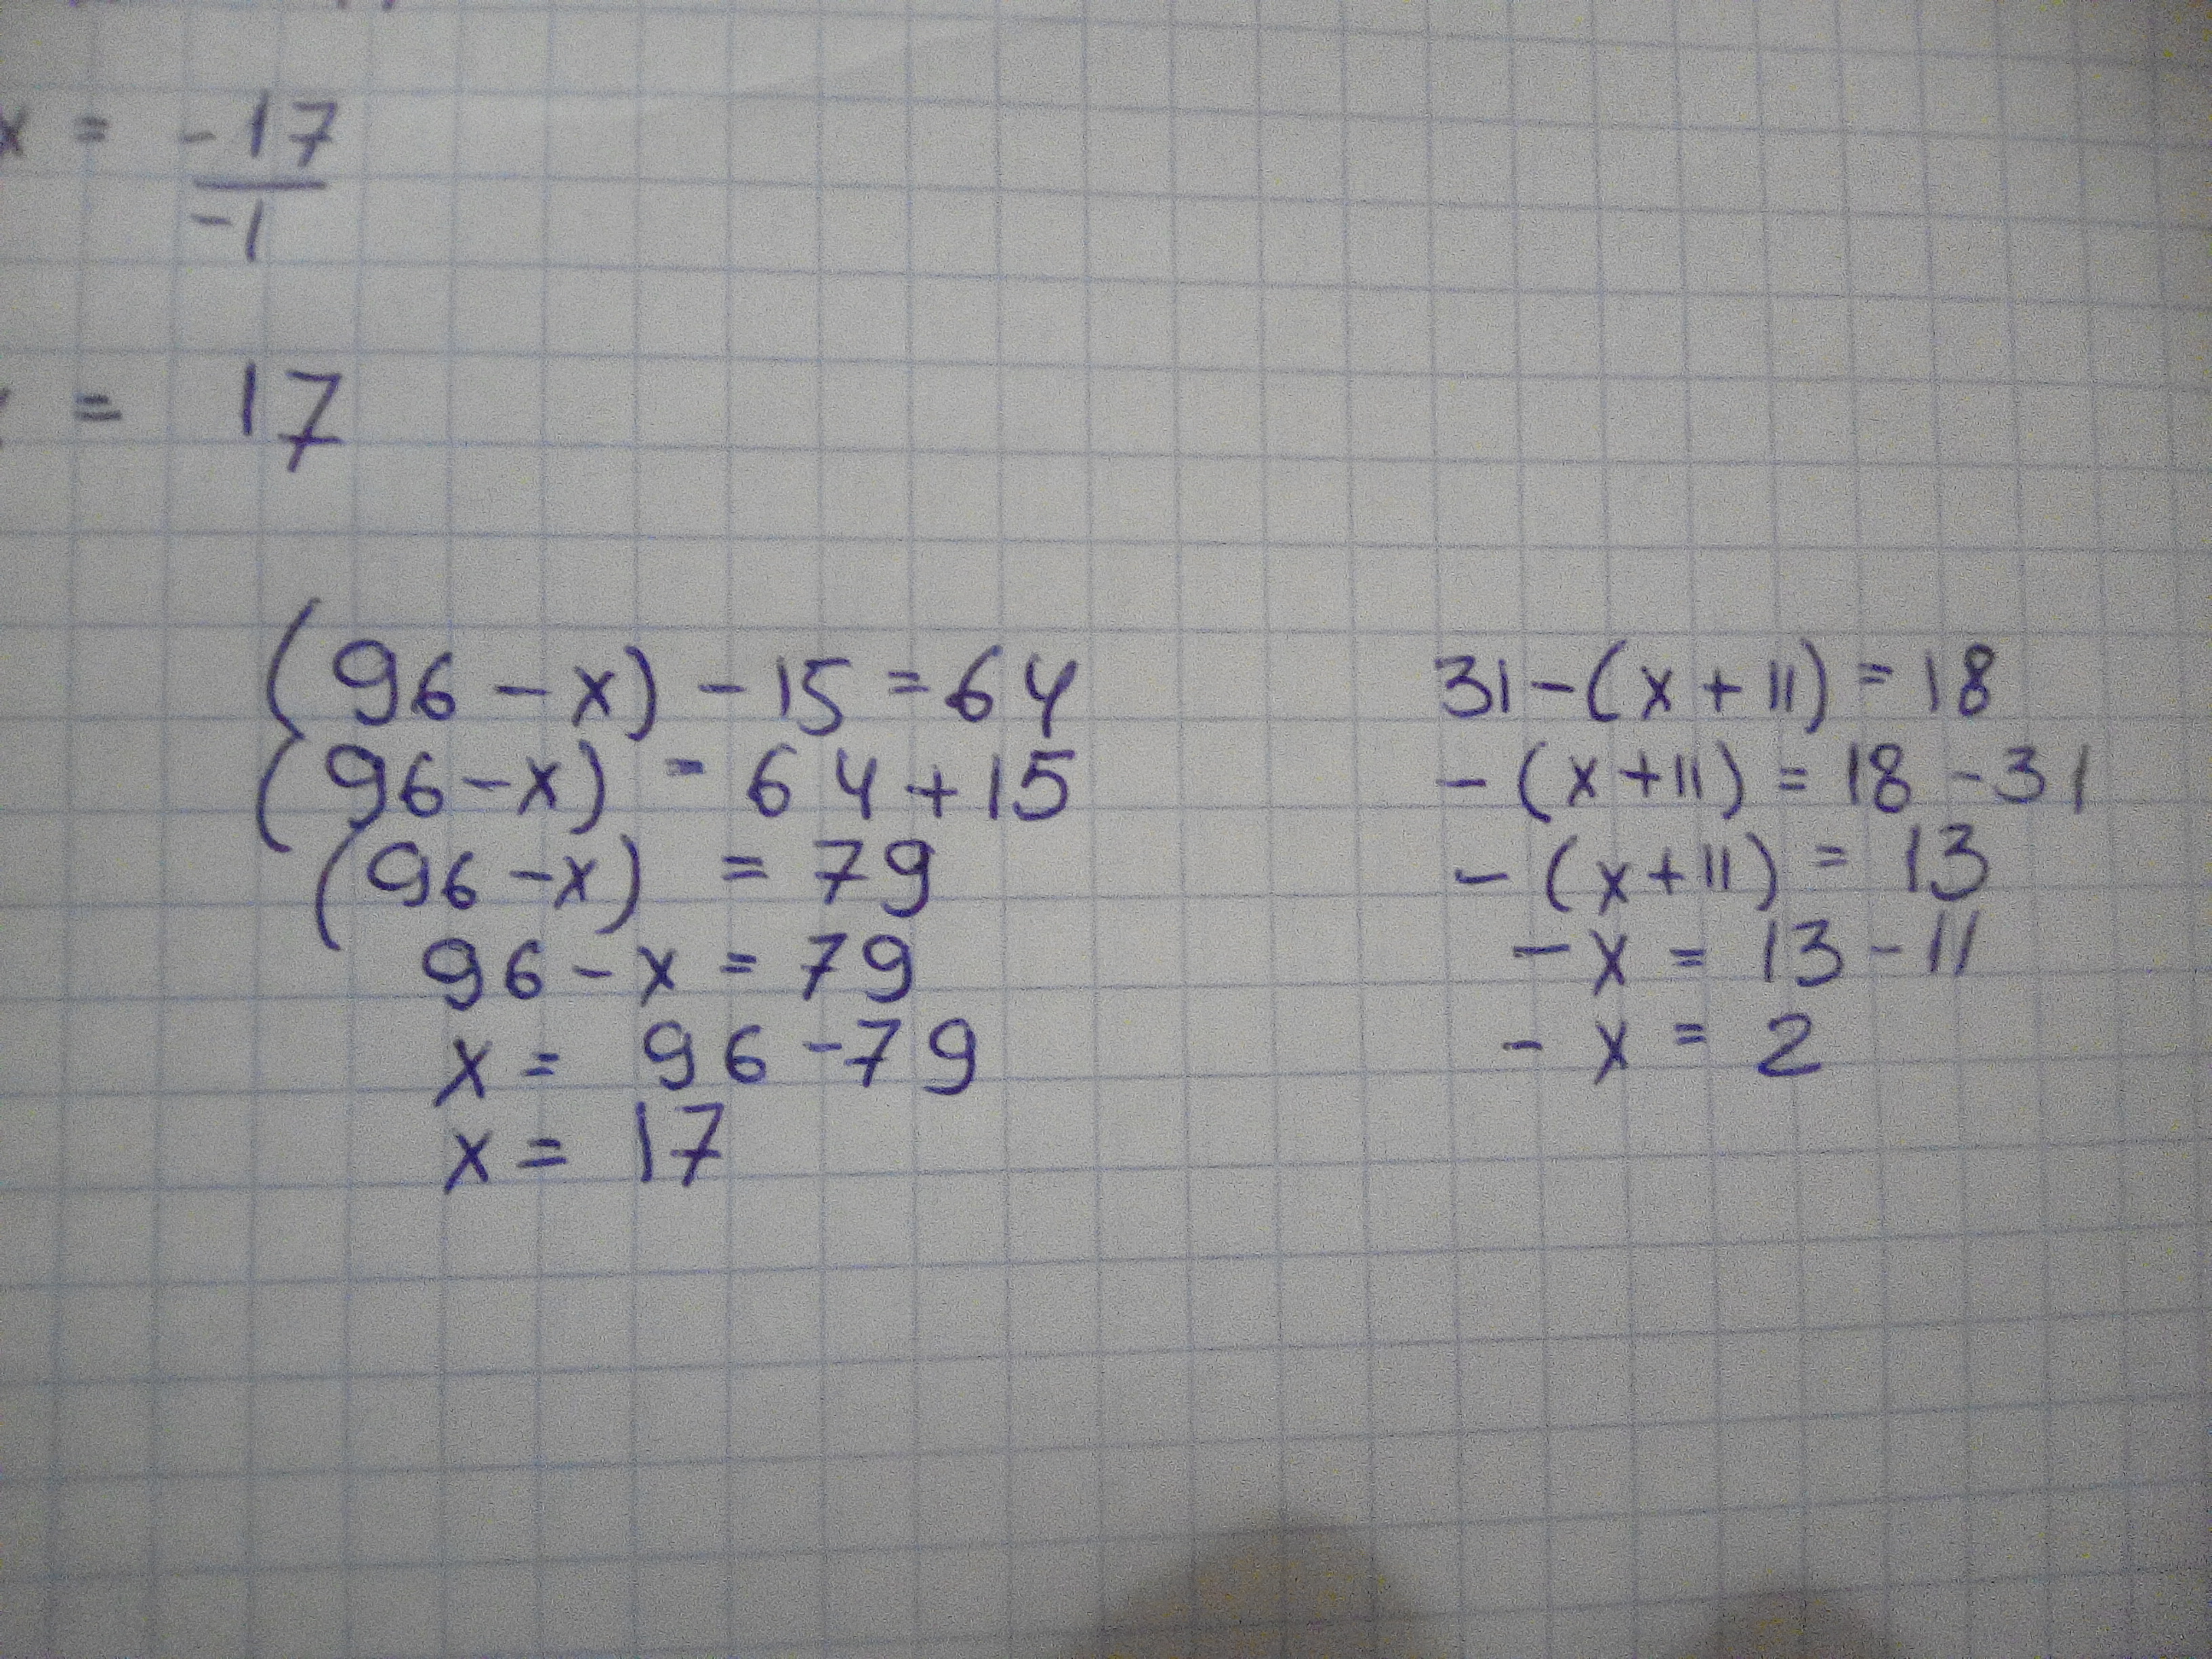 11x 15 7x 25. Уравнение (96-x)-15=64. Решить уравнение (96-х)-15=64. Решение уравнения (96-x)-15=64. (96-X)-15=64 решите уравнение.